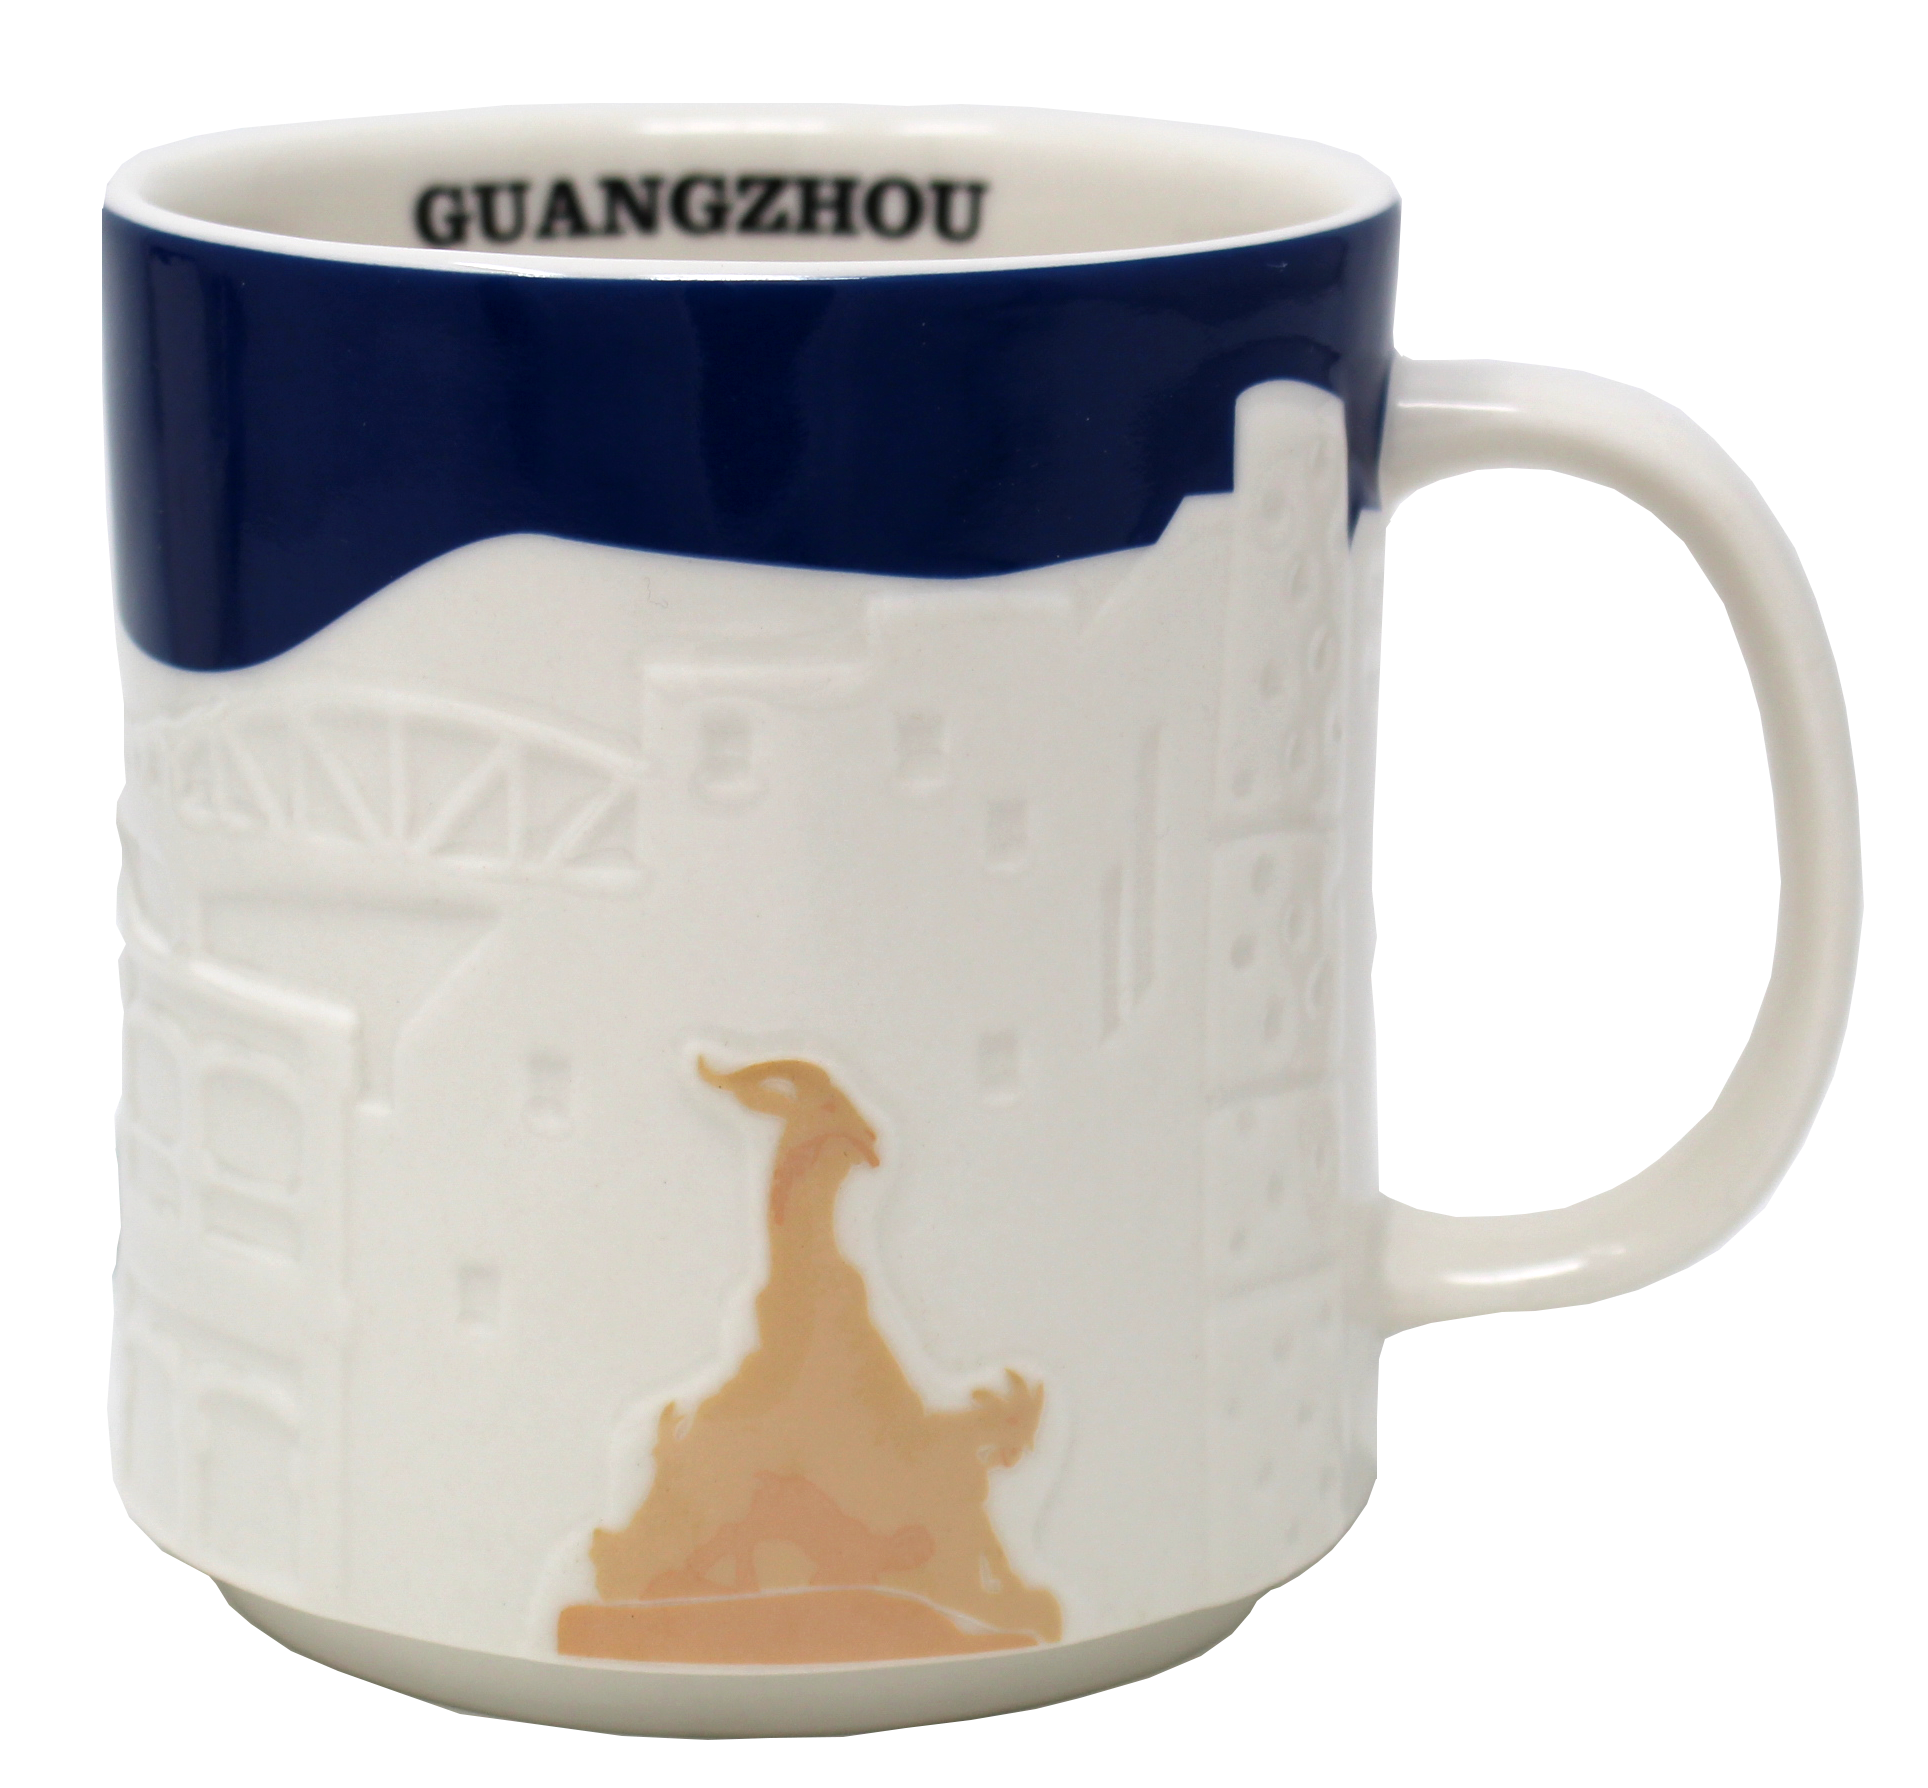 Starbucks Collector Relief Series Guangzhou Ceramic Mug, 16 Oz